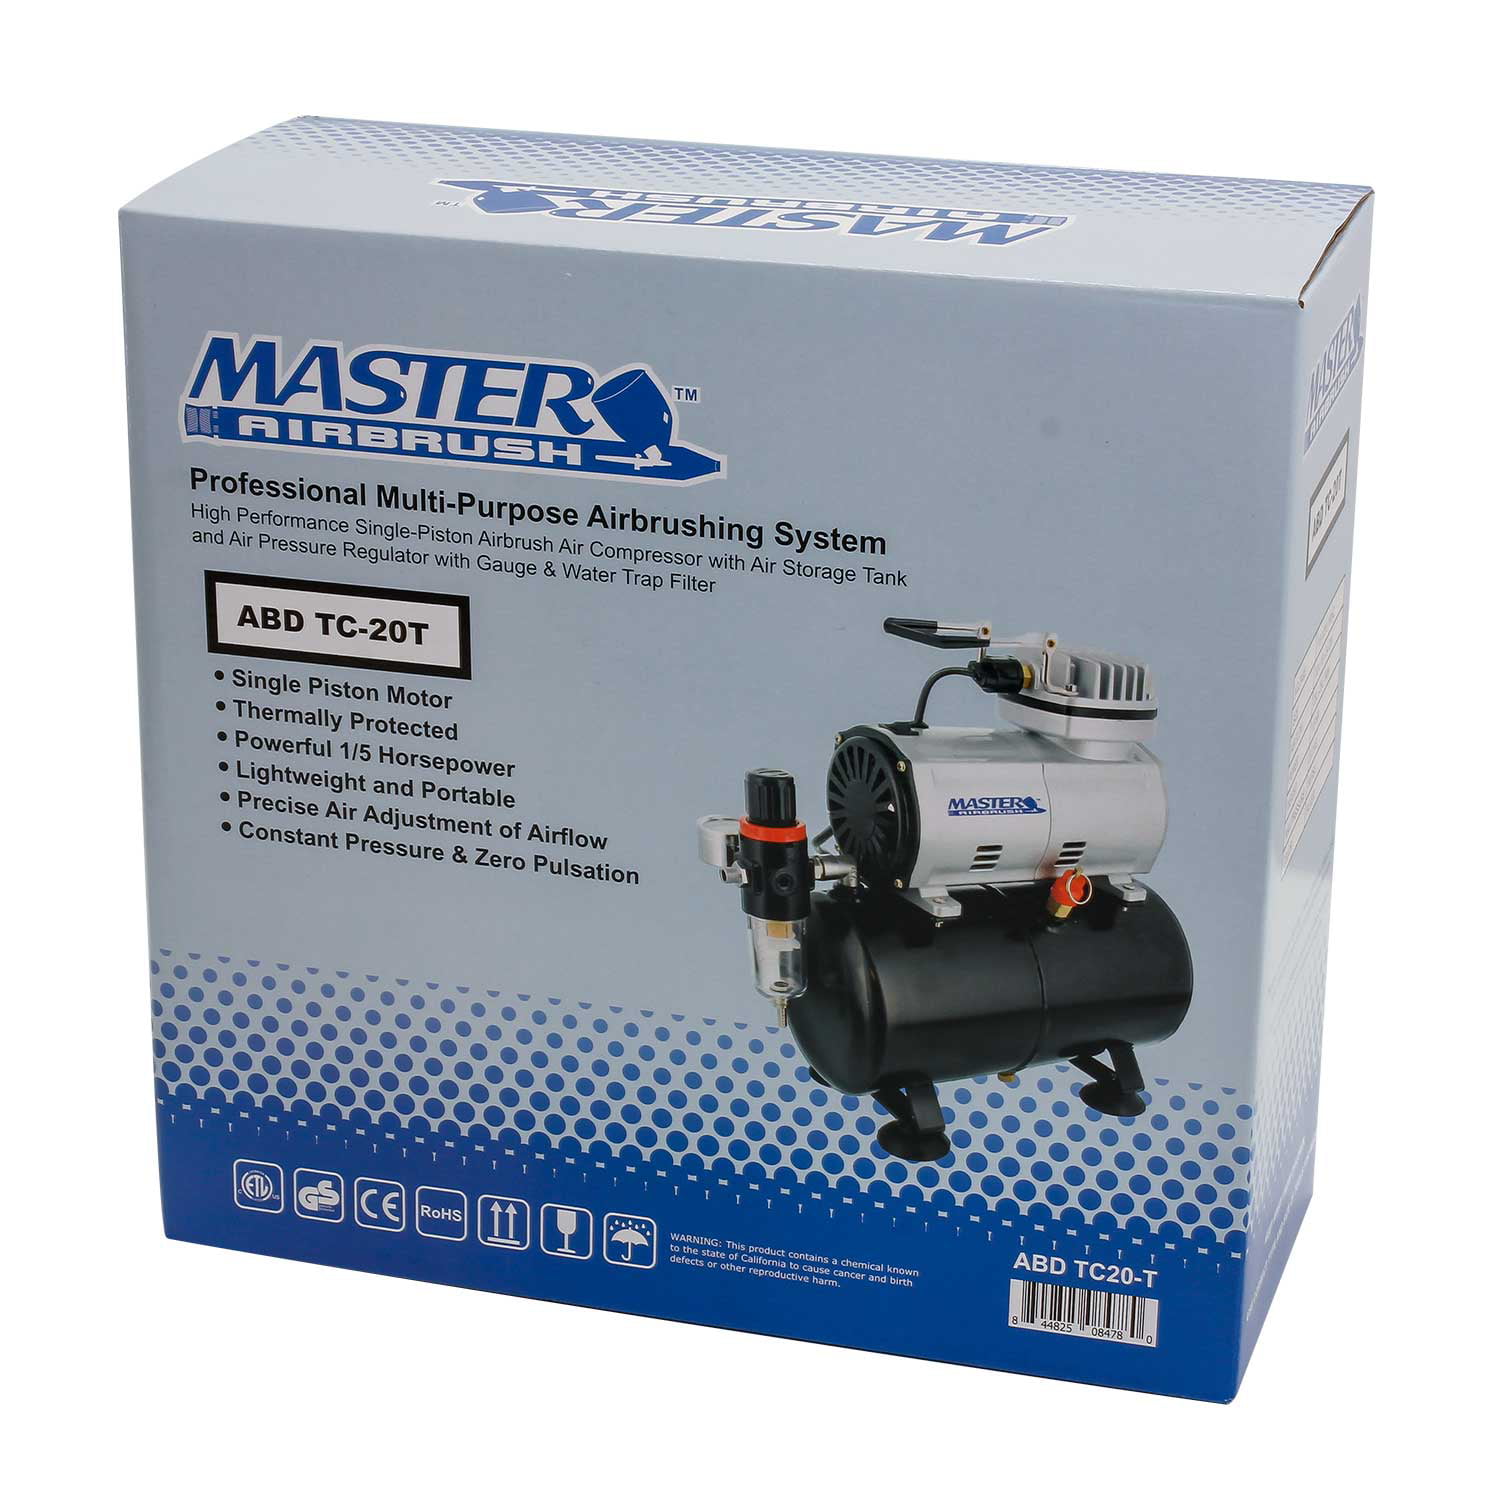 Pro Master Airbrush Compressor Set Abd Tc-20-hblf Hd-070 Model G34lf for  sale online